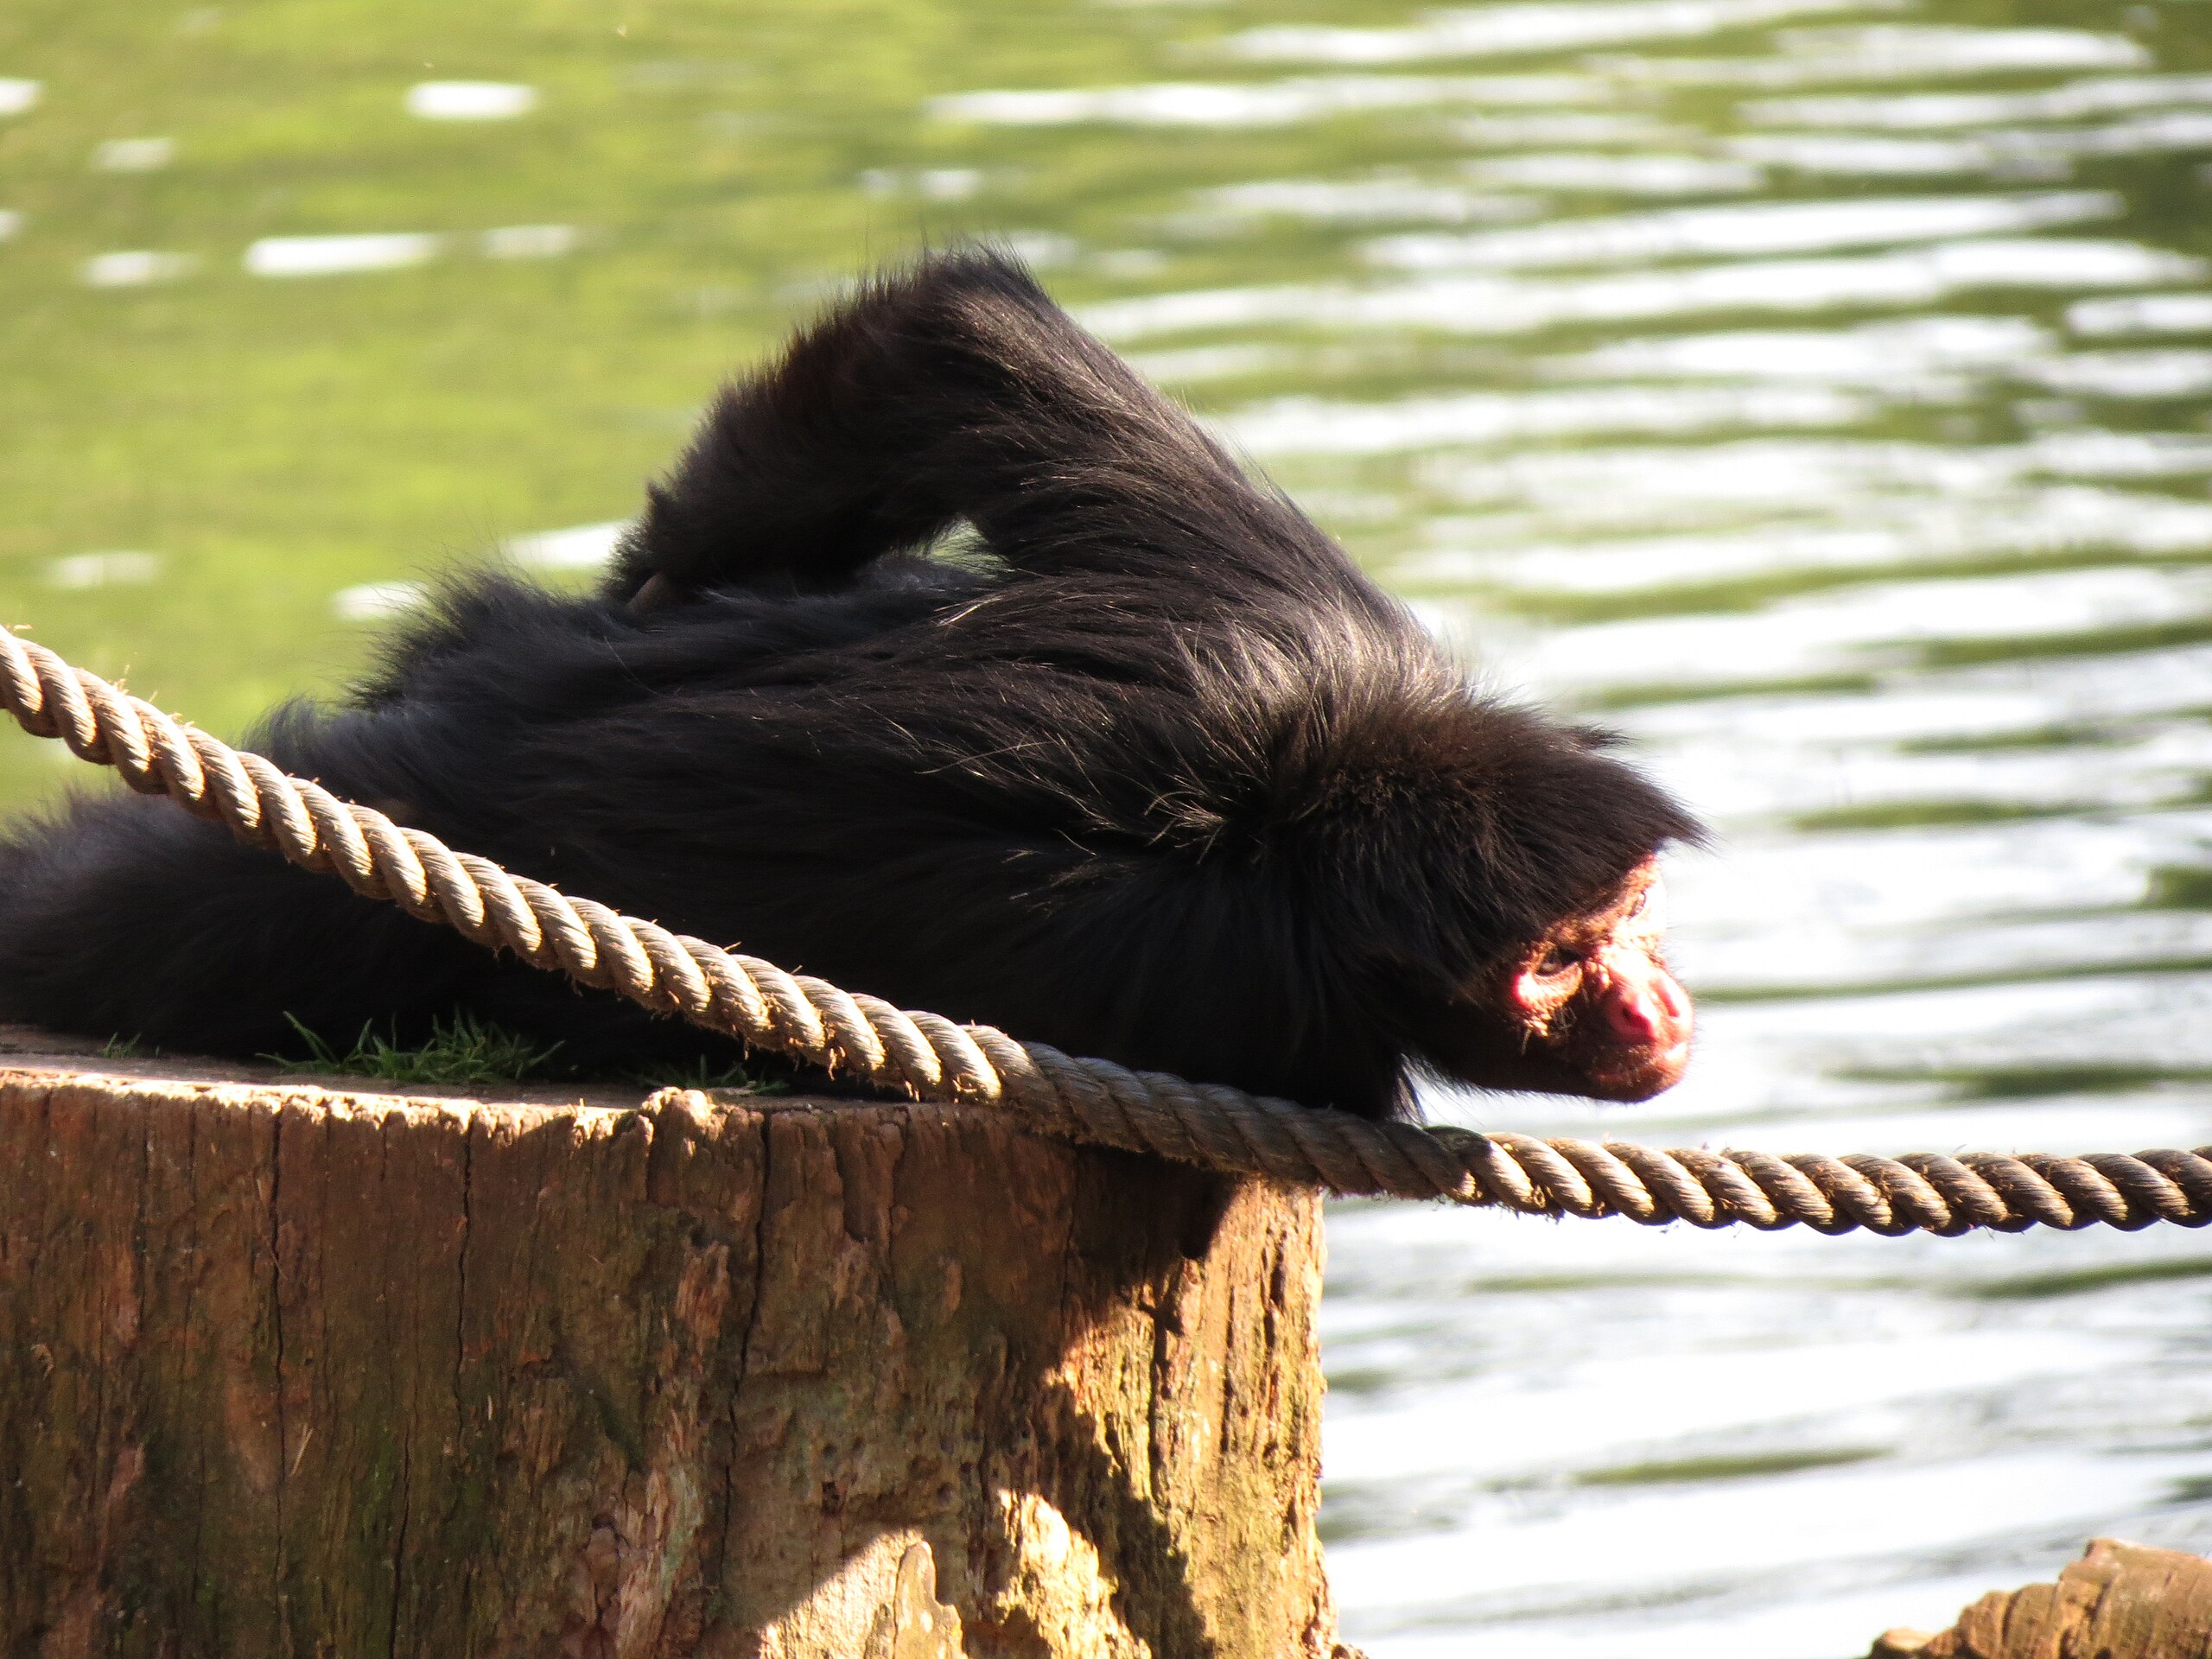 File:Macaco-aranha-cara-vermelha.jpg - Wikimedia Commons